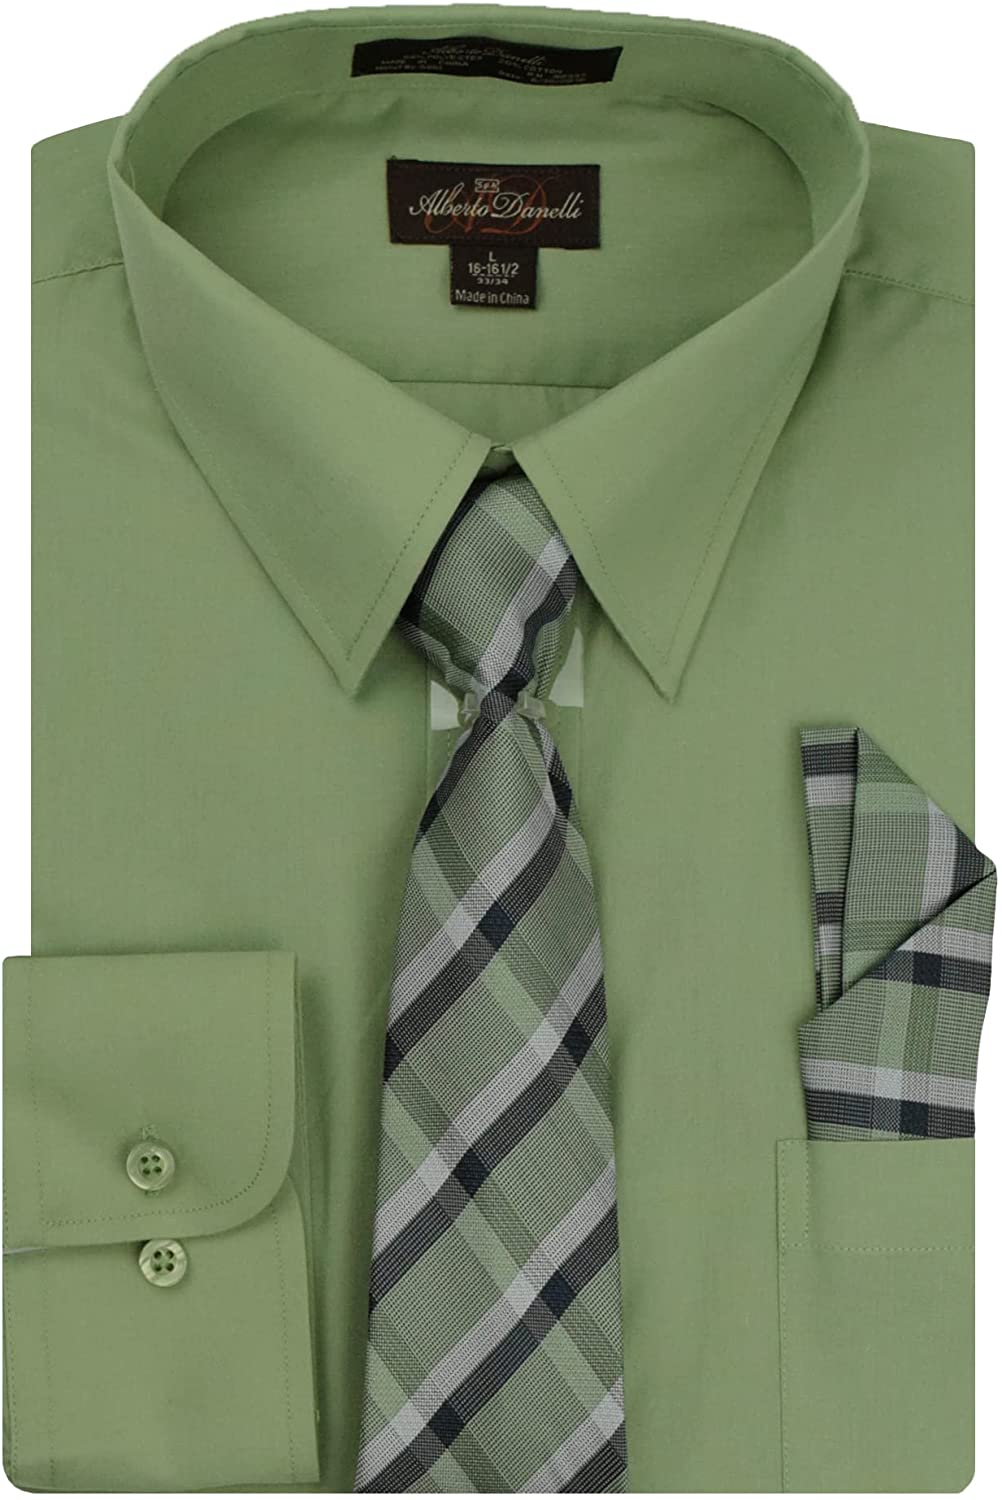 Alberto Danelli Men's Long Sleeve Dress Shirt with Matching Tie and Handkerchief Set 